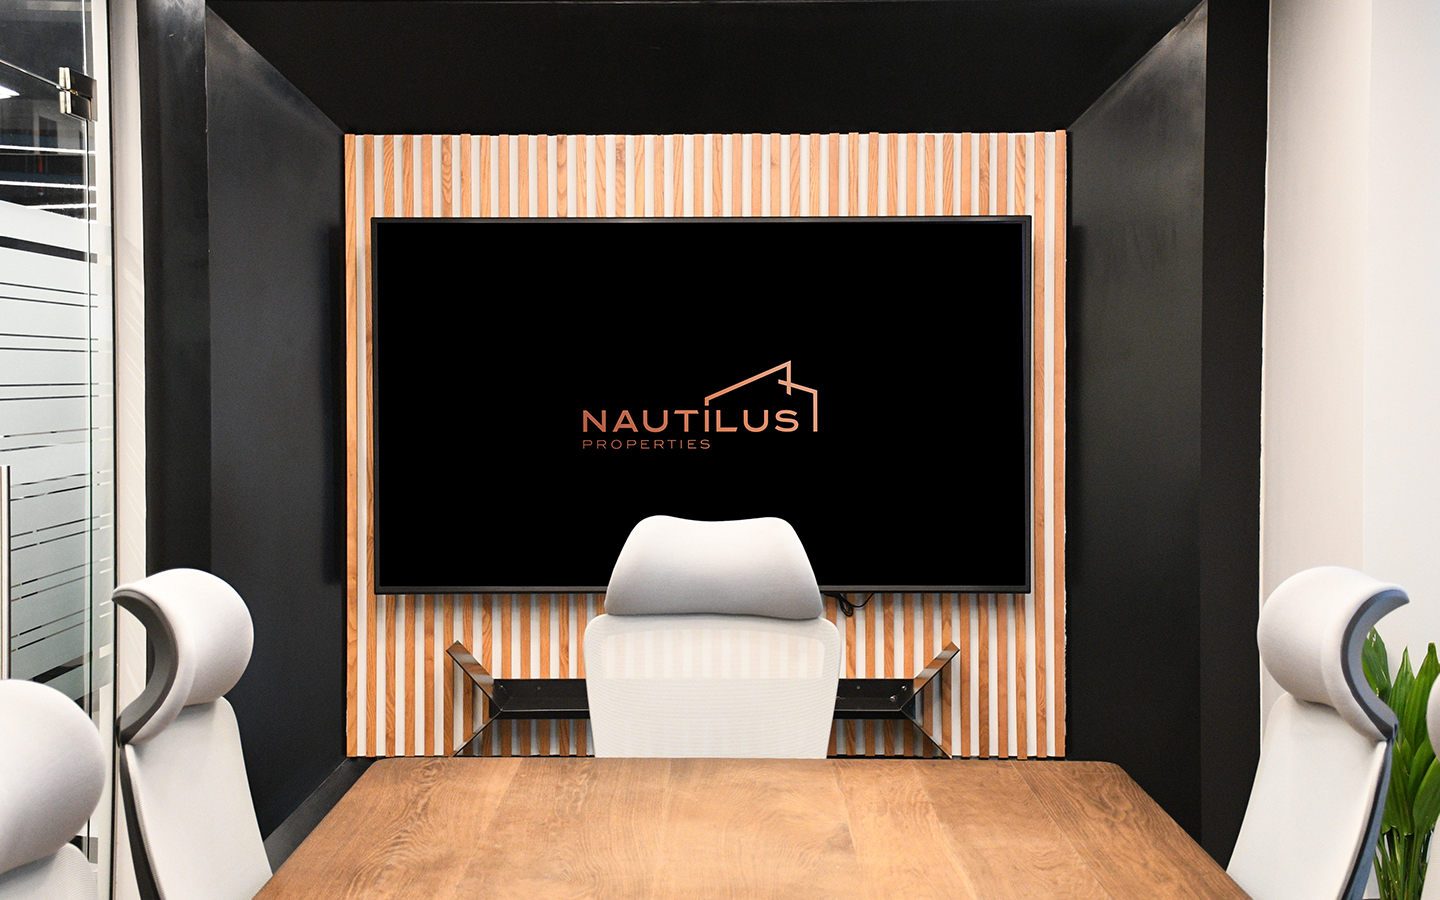 Nautilus Properties about us background Dubai and UAE